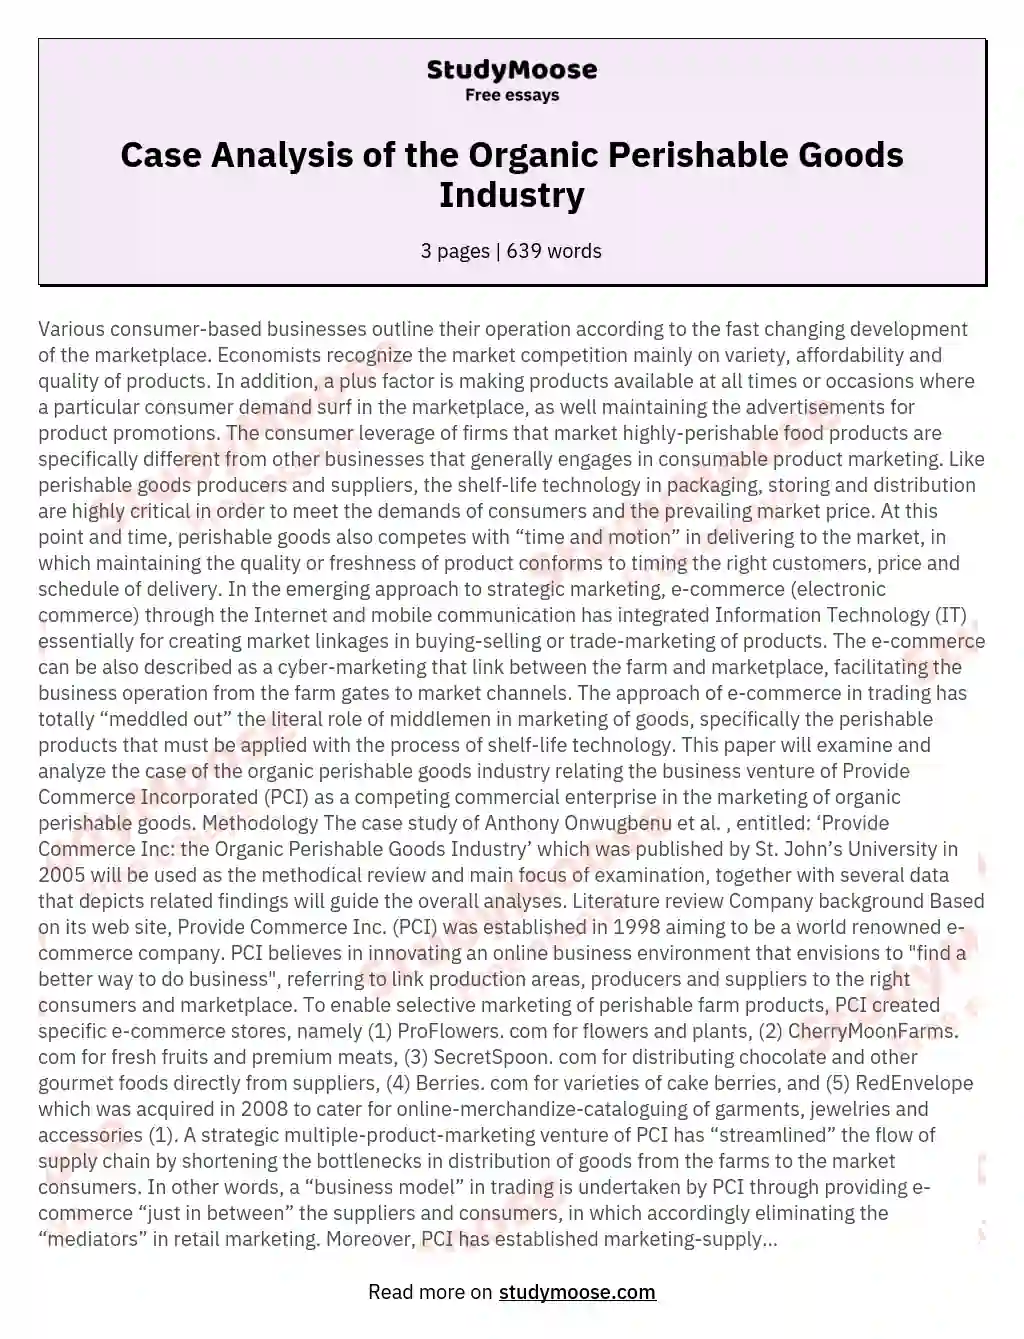 Case Analysis of the Organic Perishable Goods Industry essay